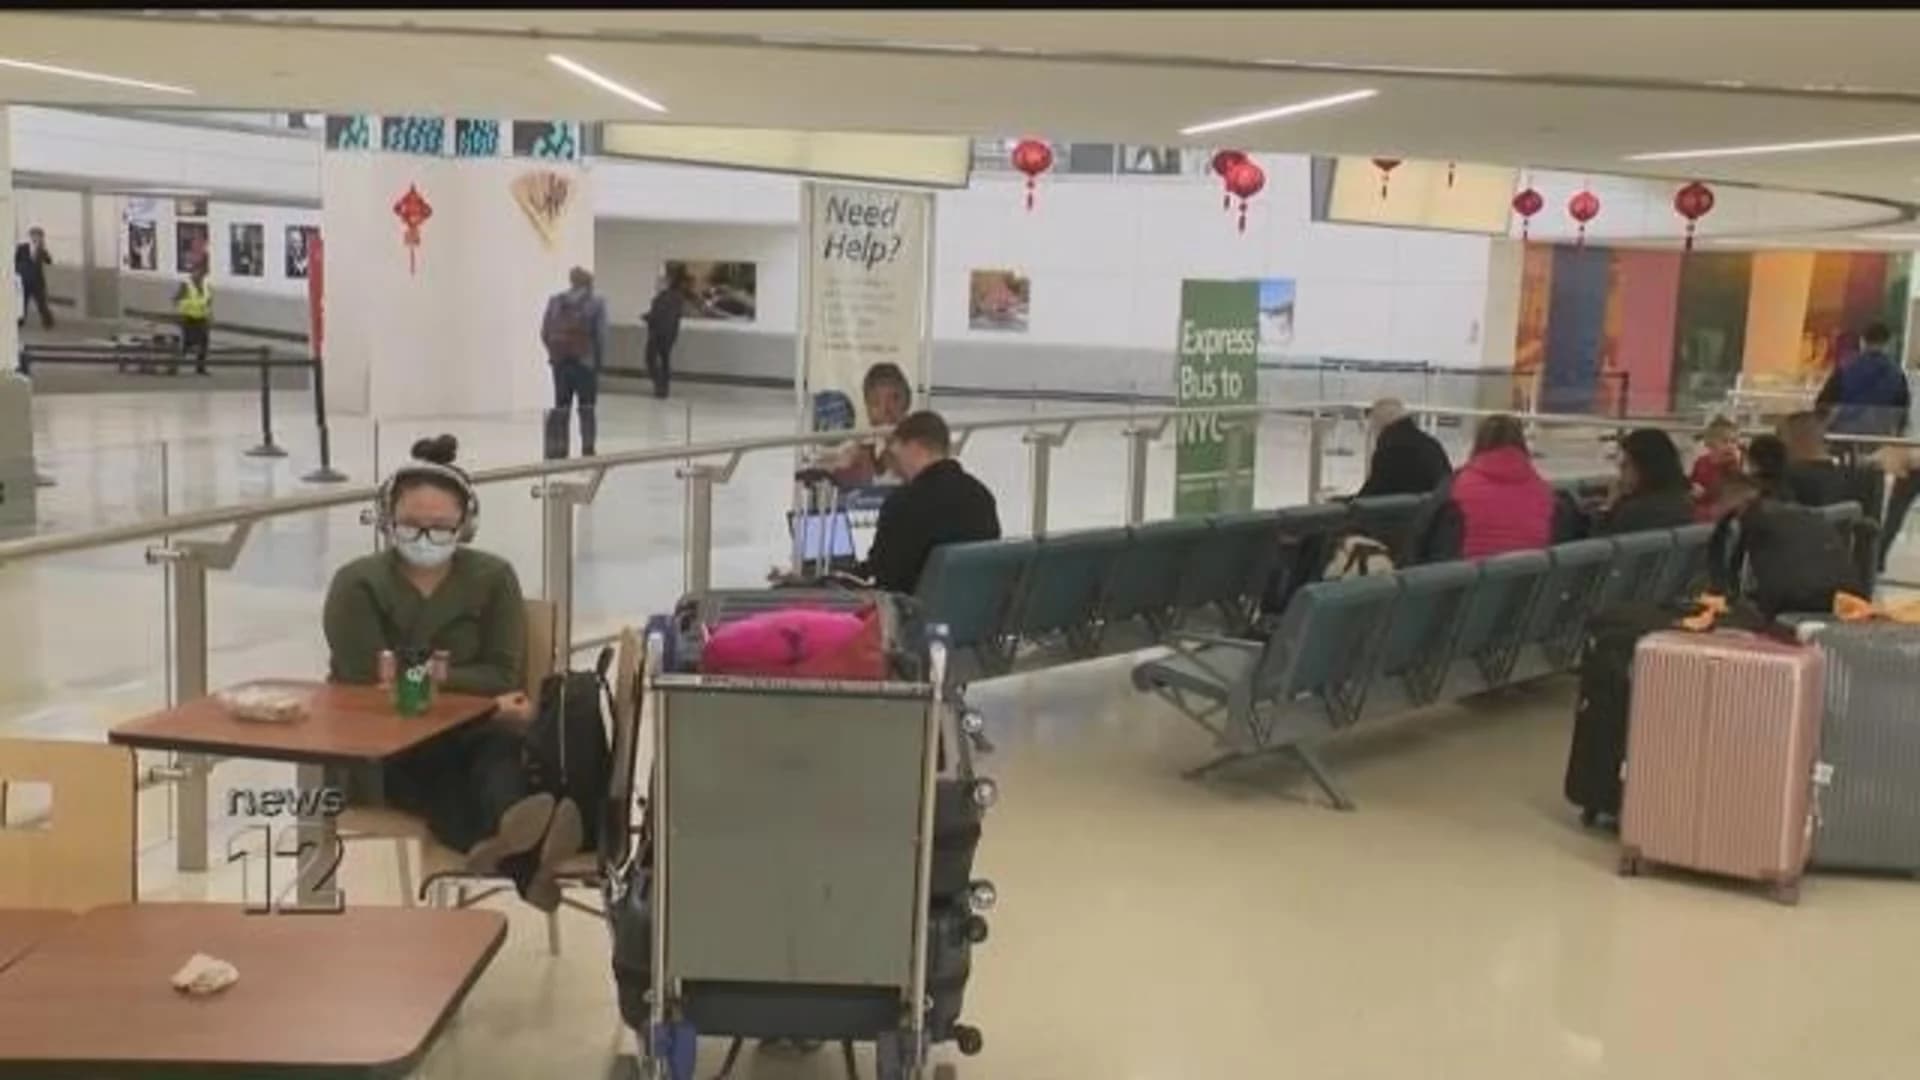 1,200 passengers screened for coronavirus so far at Newark Liberty International Airport